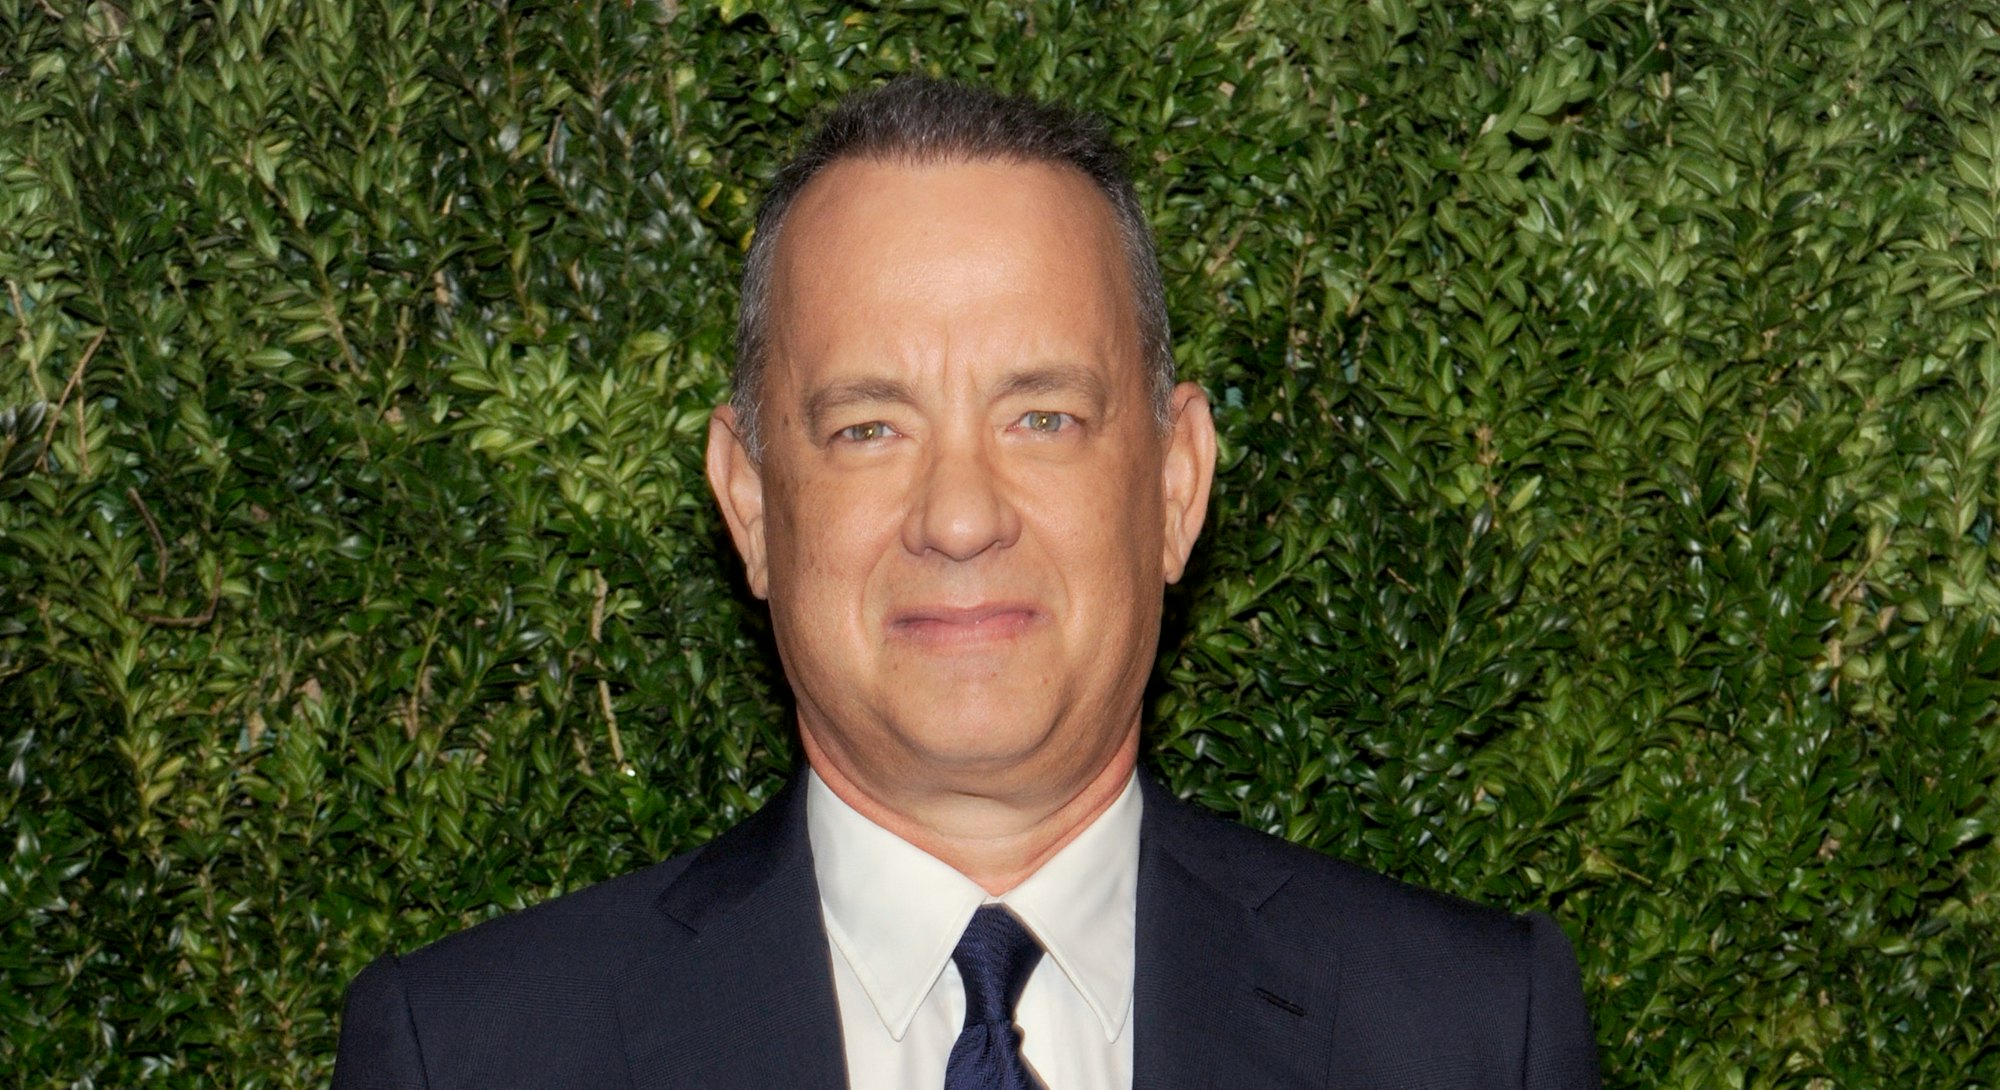 NEW YORK, NY - NOVEMBER 15: Actor Tom Hanks attends the 2016 Museum Of Modern Art Film Benefit prese...